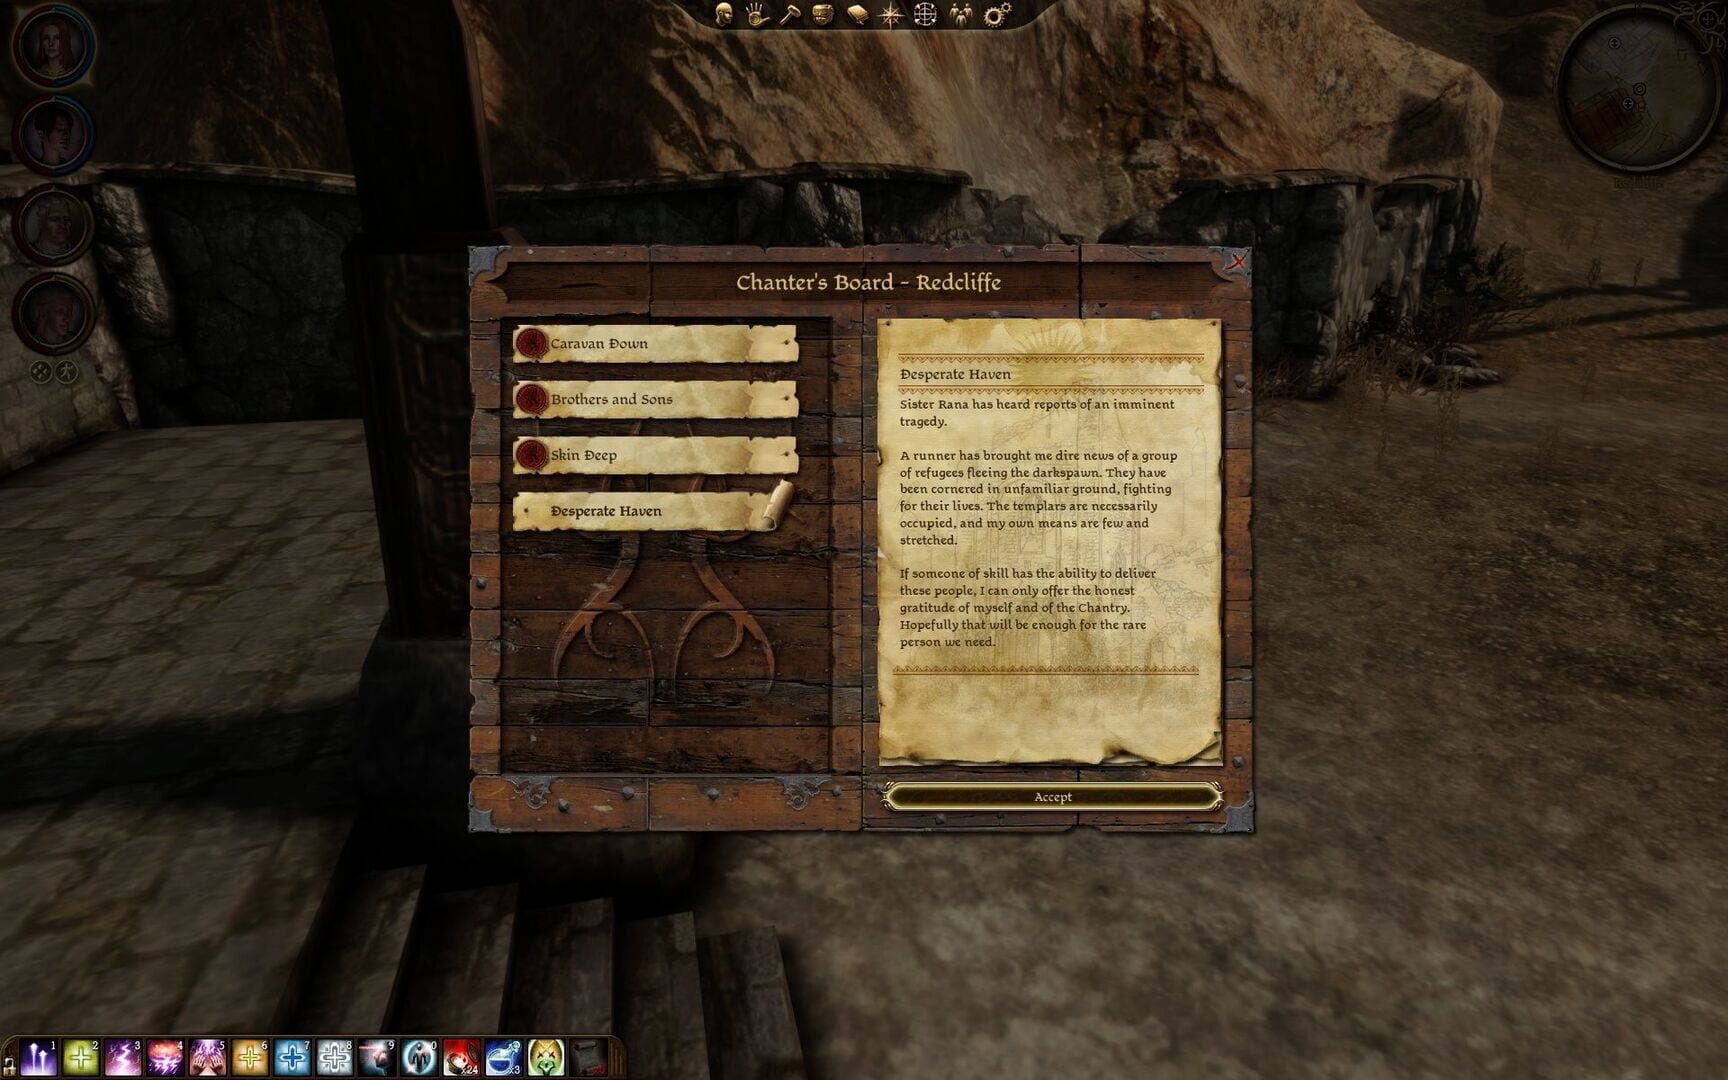 Dragon Age: Origins screenshots